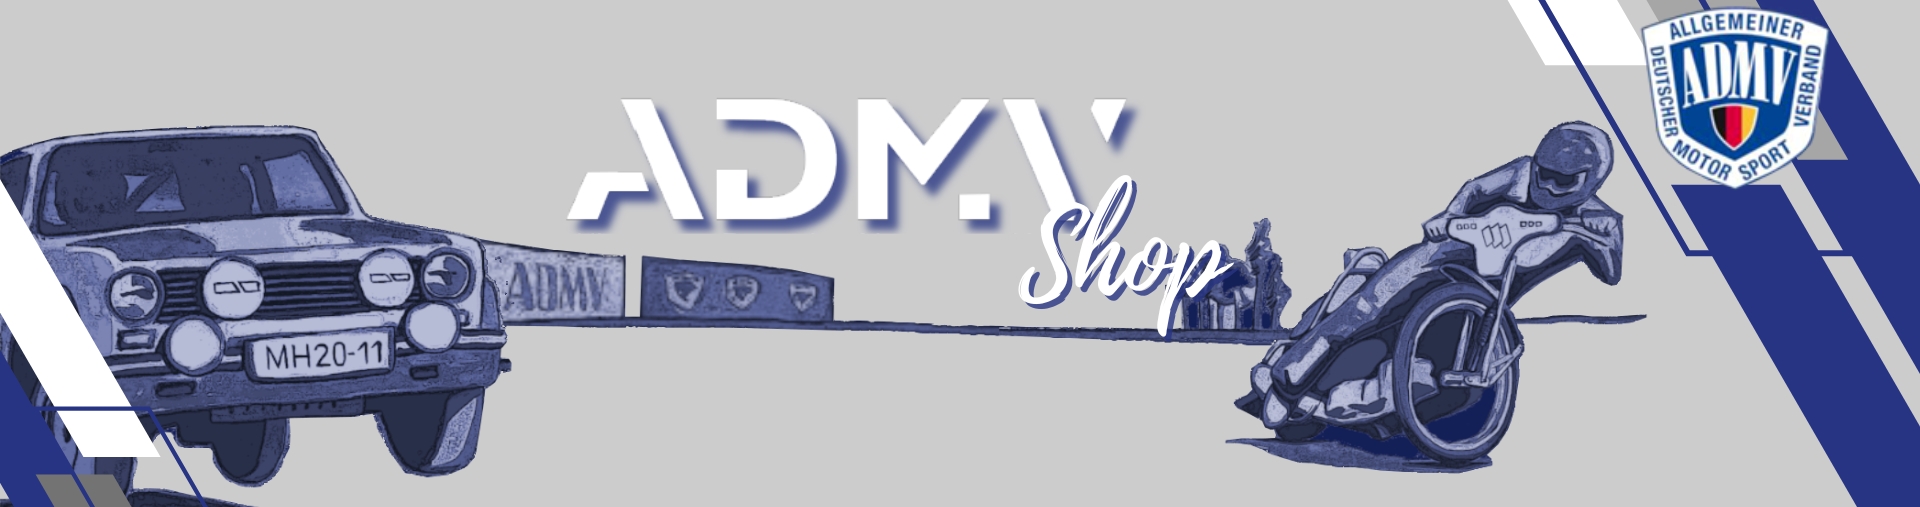 ADMV Shop